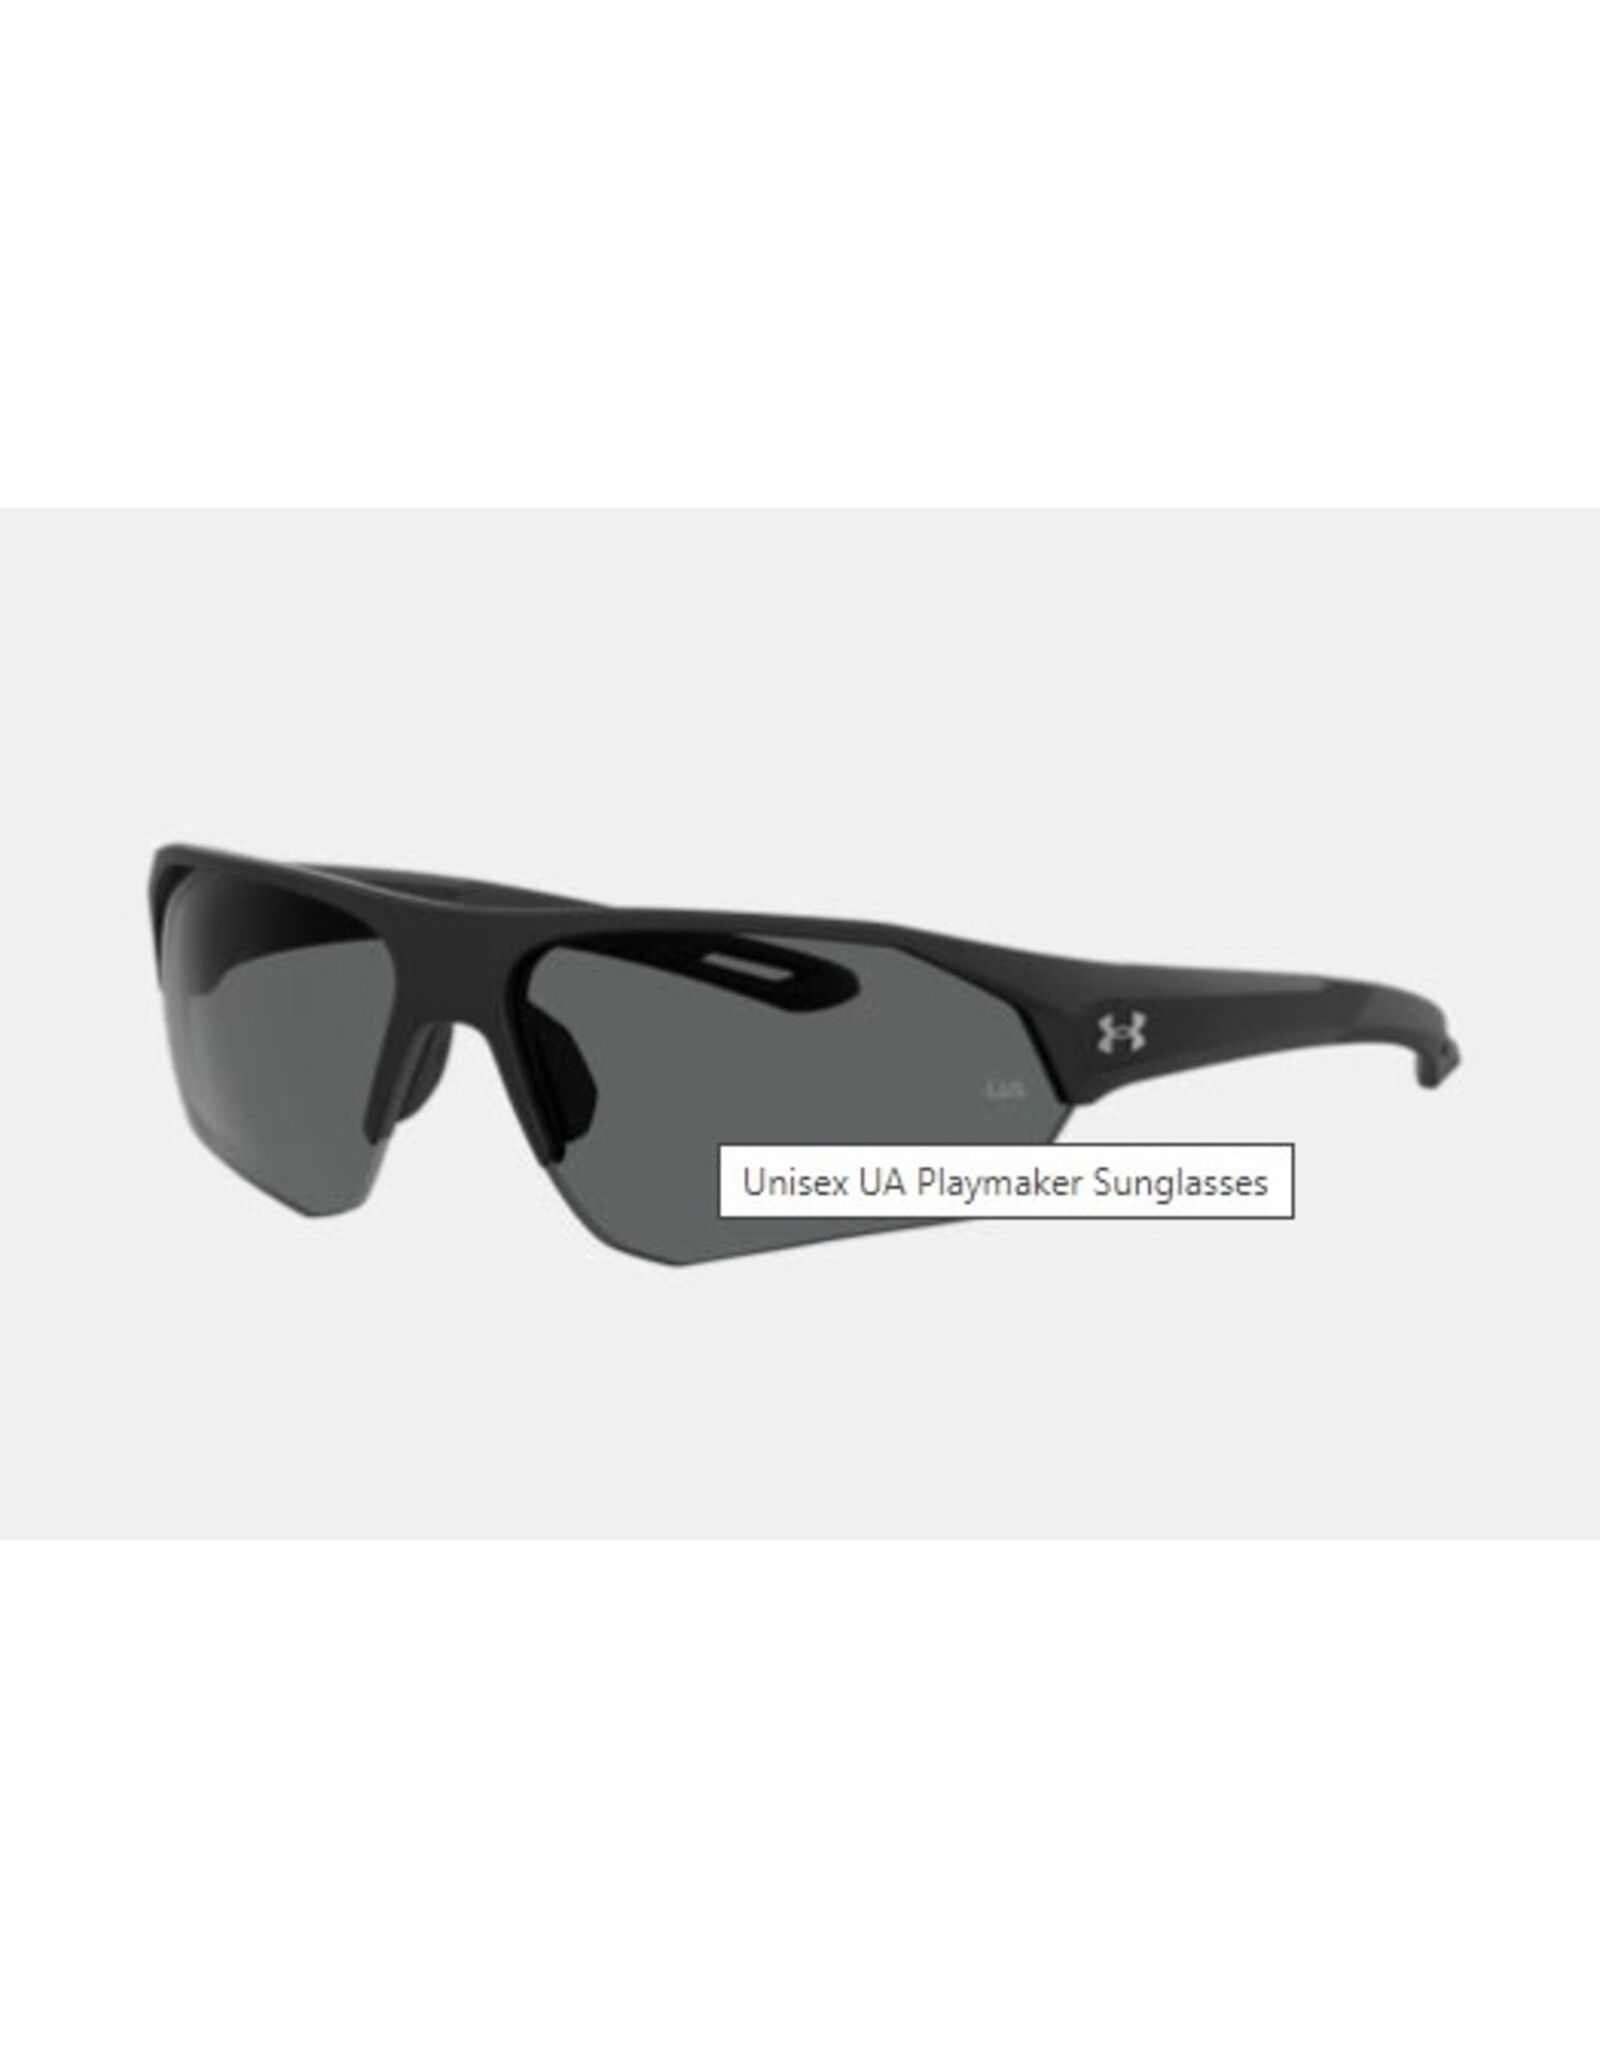 Under Armour UA Playmaker Sunglasses Matte Black/Gray Poloarized